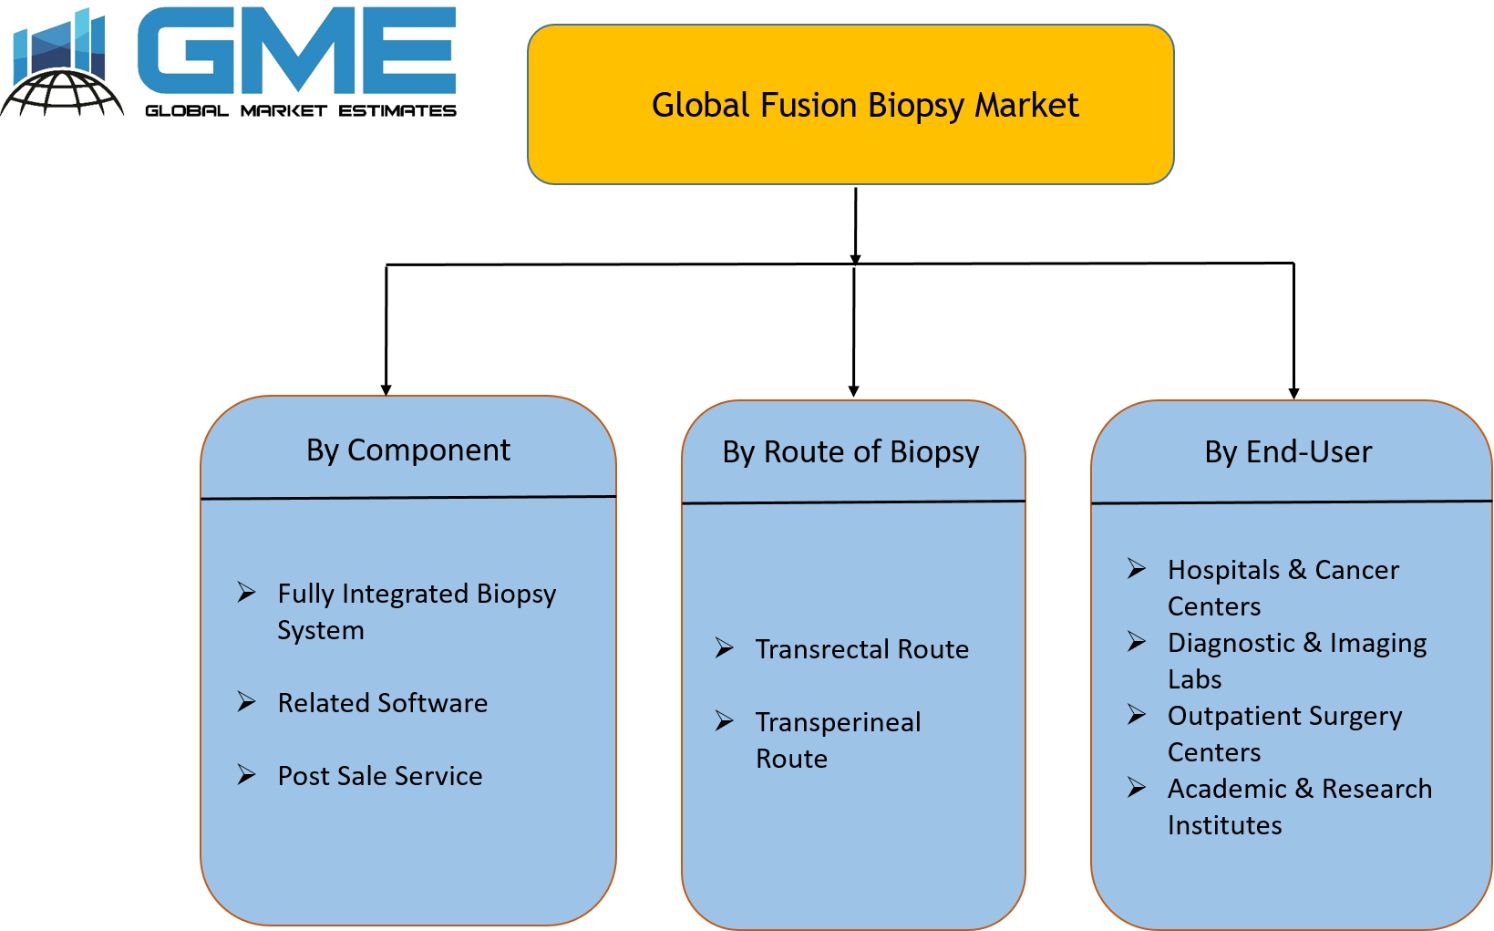 Global Fusion Biopsy Market Segmentation